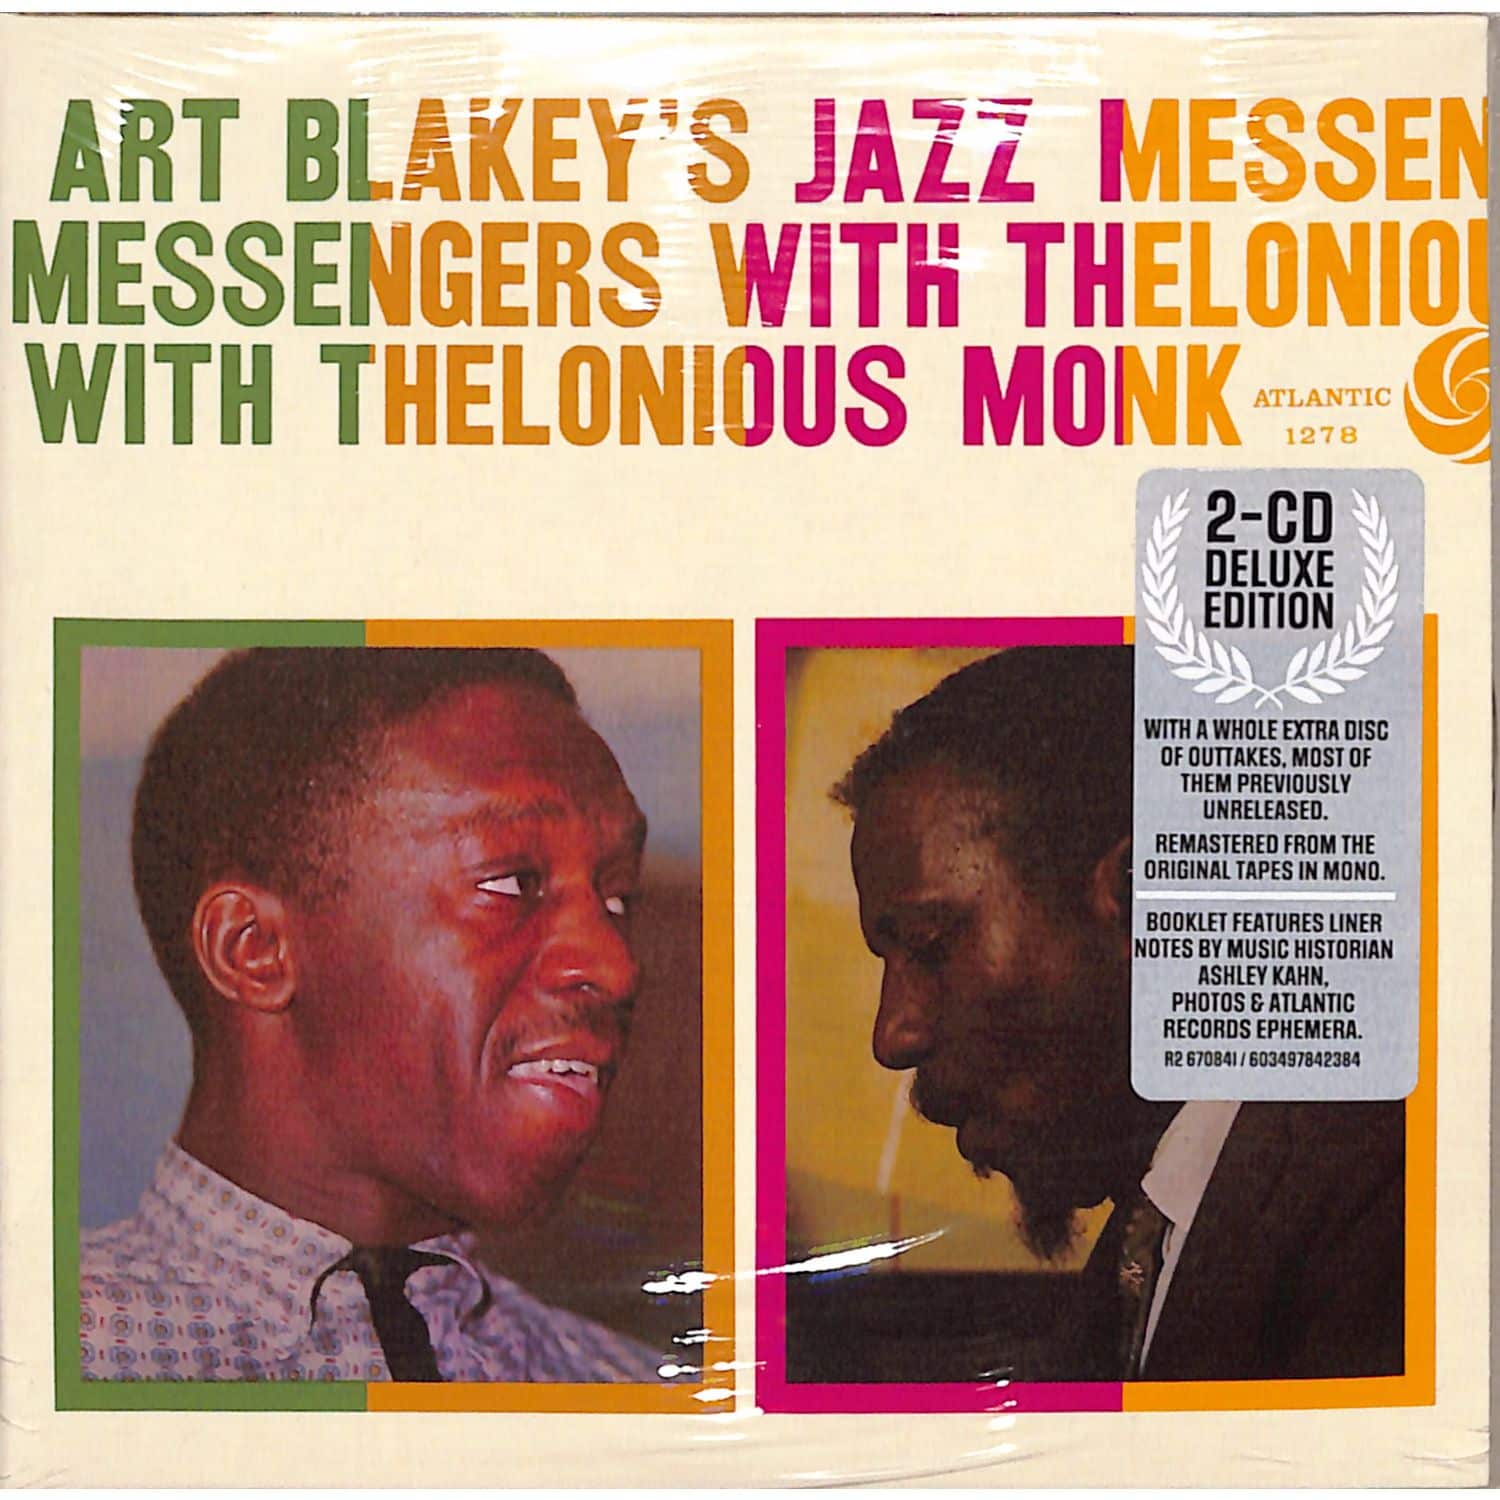 Art Blakey - ART BLAKEY S JAZZ MESSENGERS WITH THELONIOUS MONK 